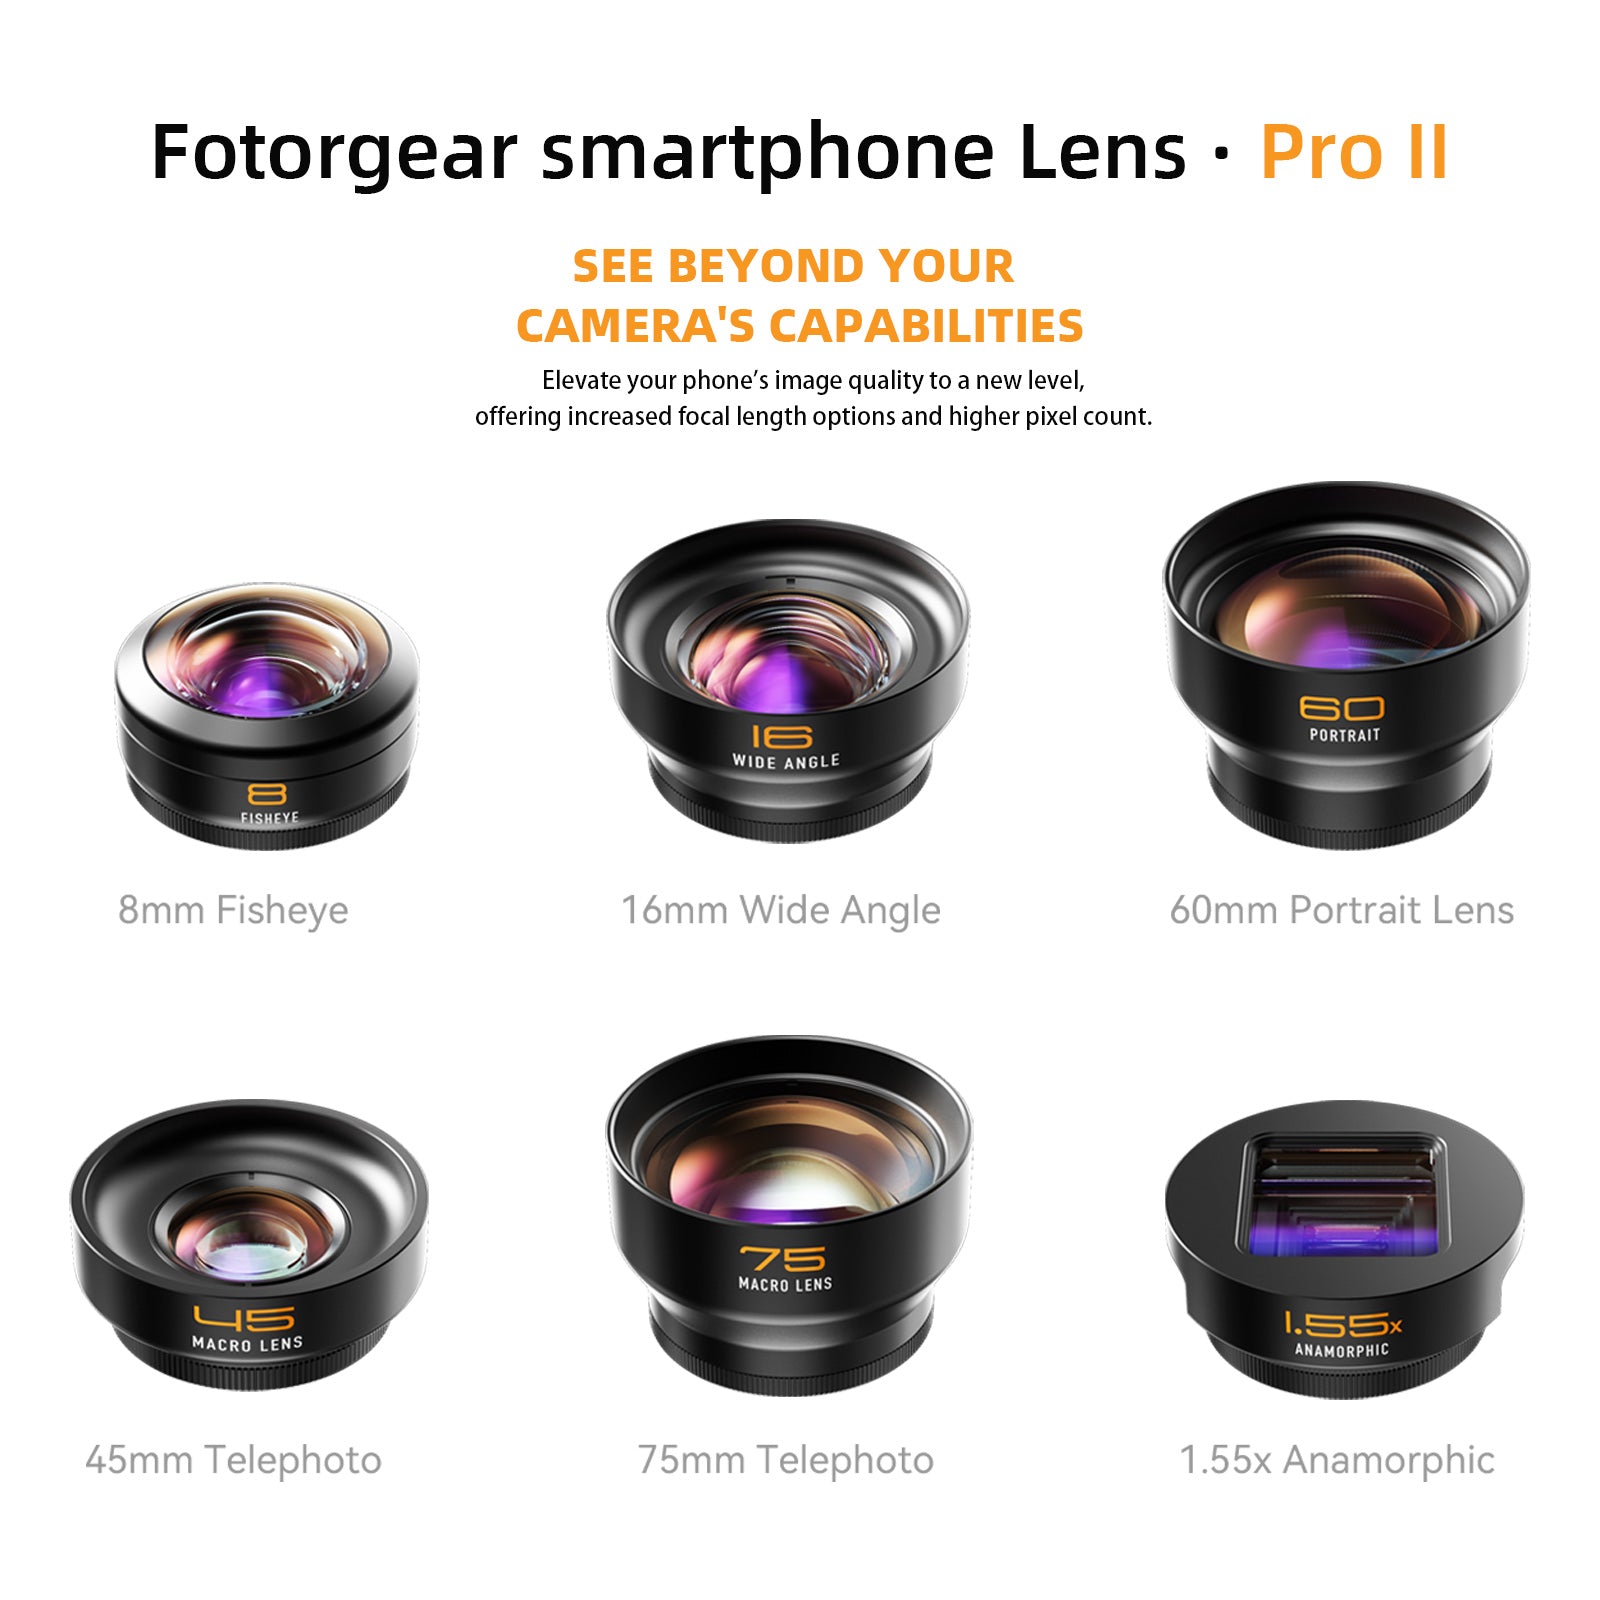 Fotorgear 16mm Wide Angle Lens · Pro II series